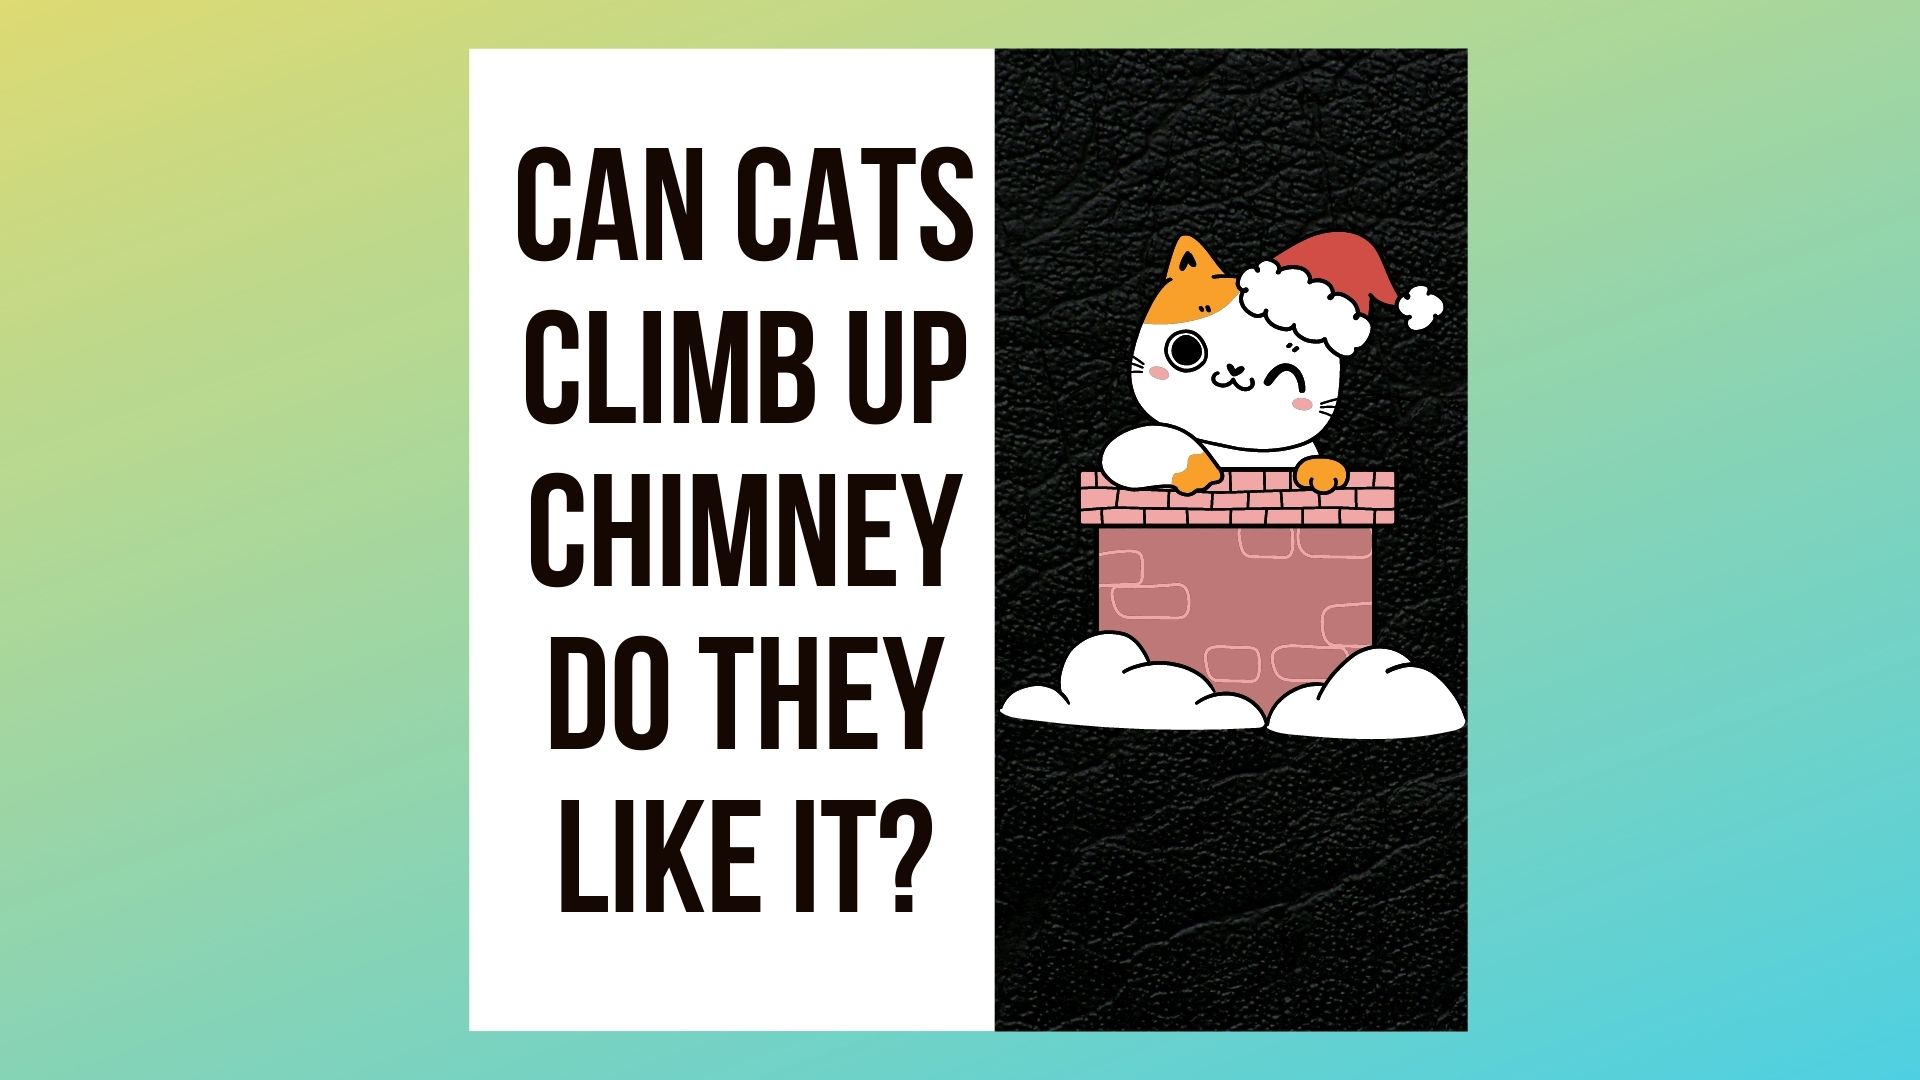 Can cats climb up chimneys